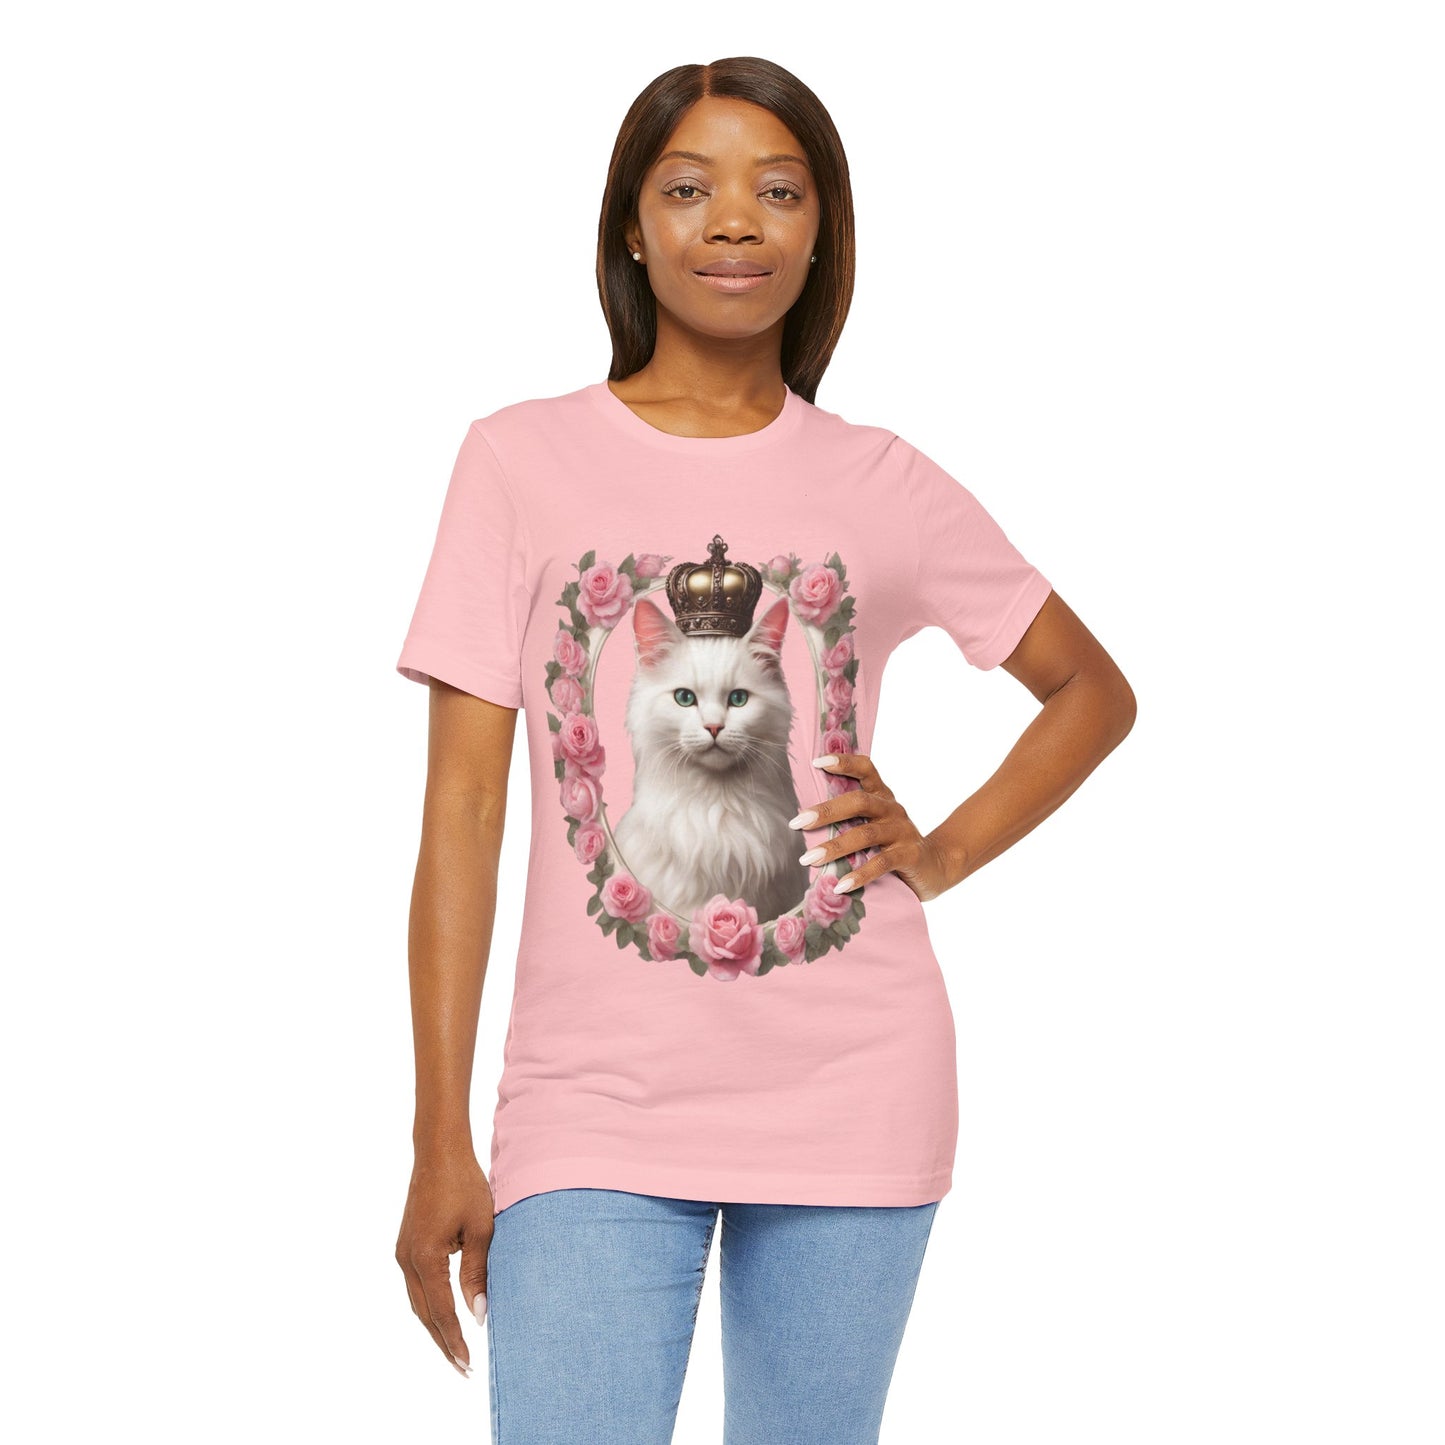 Coquette Kitty Cat Princess Women's Jersey Short Sleeved Tee Size S-2xl